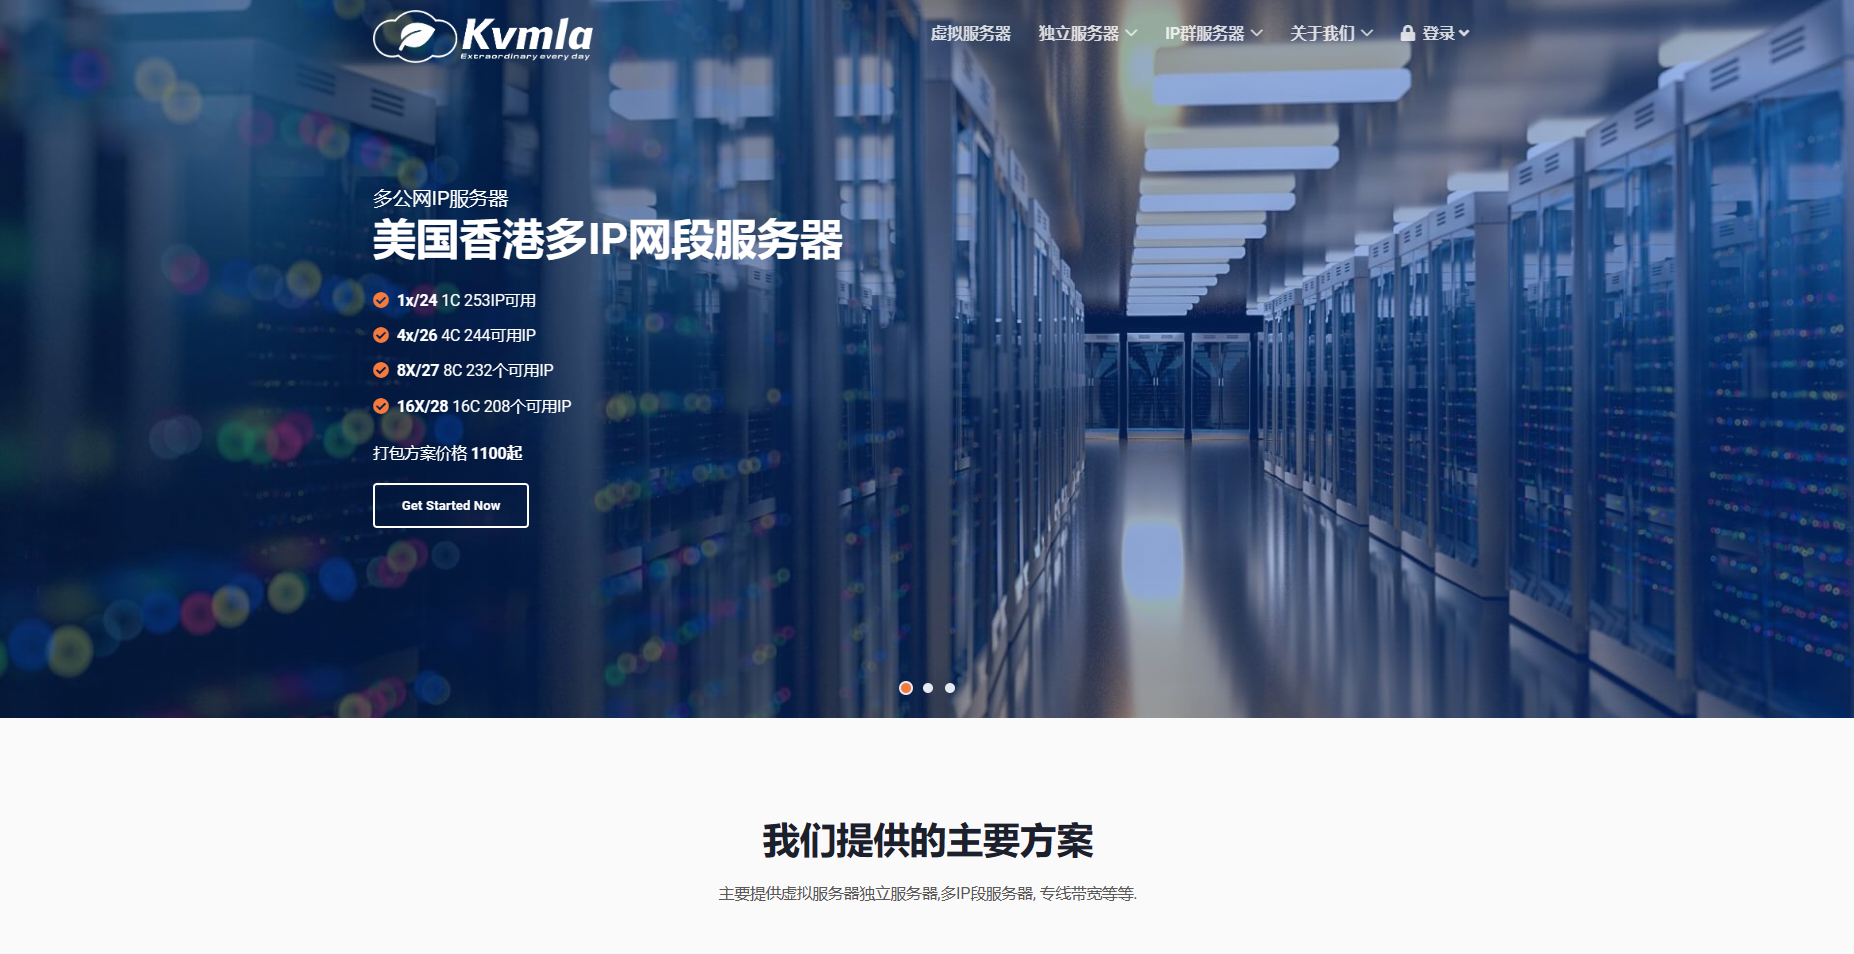 kvmla：日本VPS(软银)8折优惠，可叠加充值多送20%活动，60元/月，2G内存/2核/30gSSD/600G流量，支持Windows/Linux